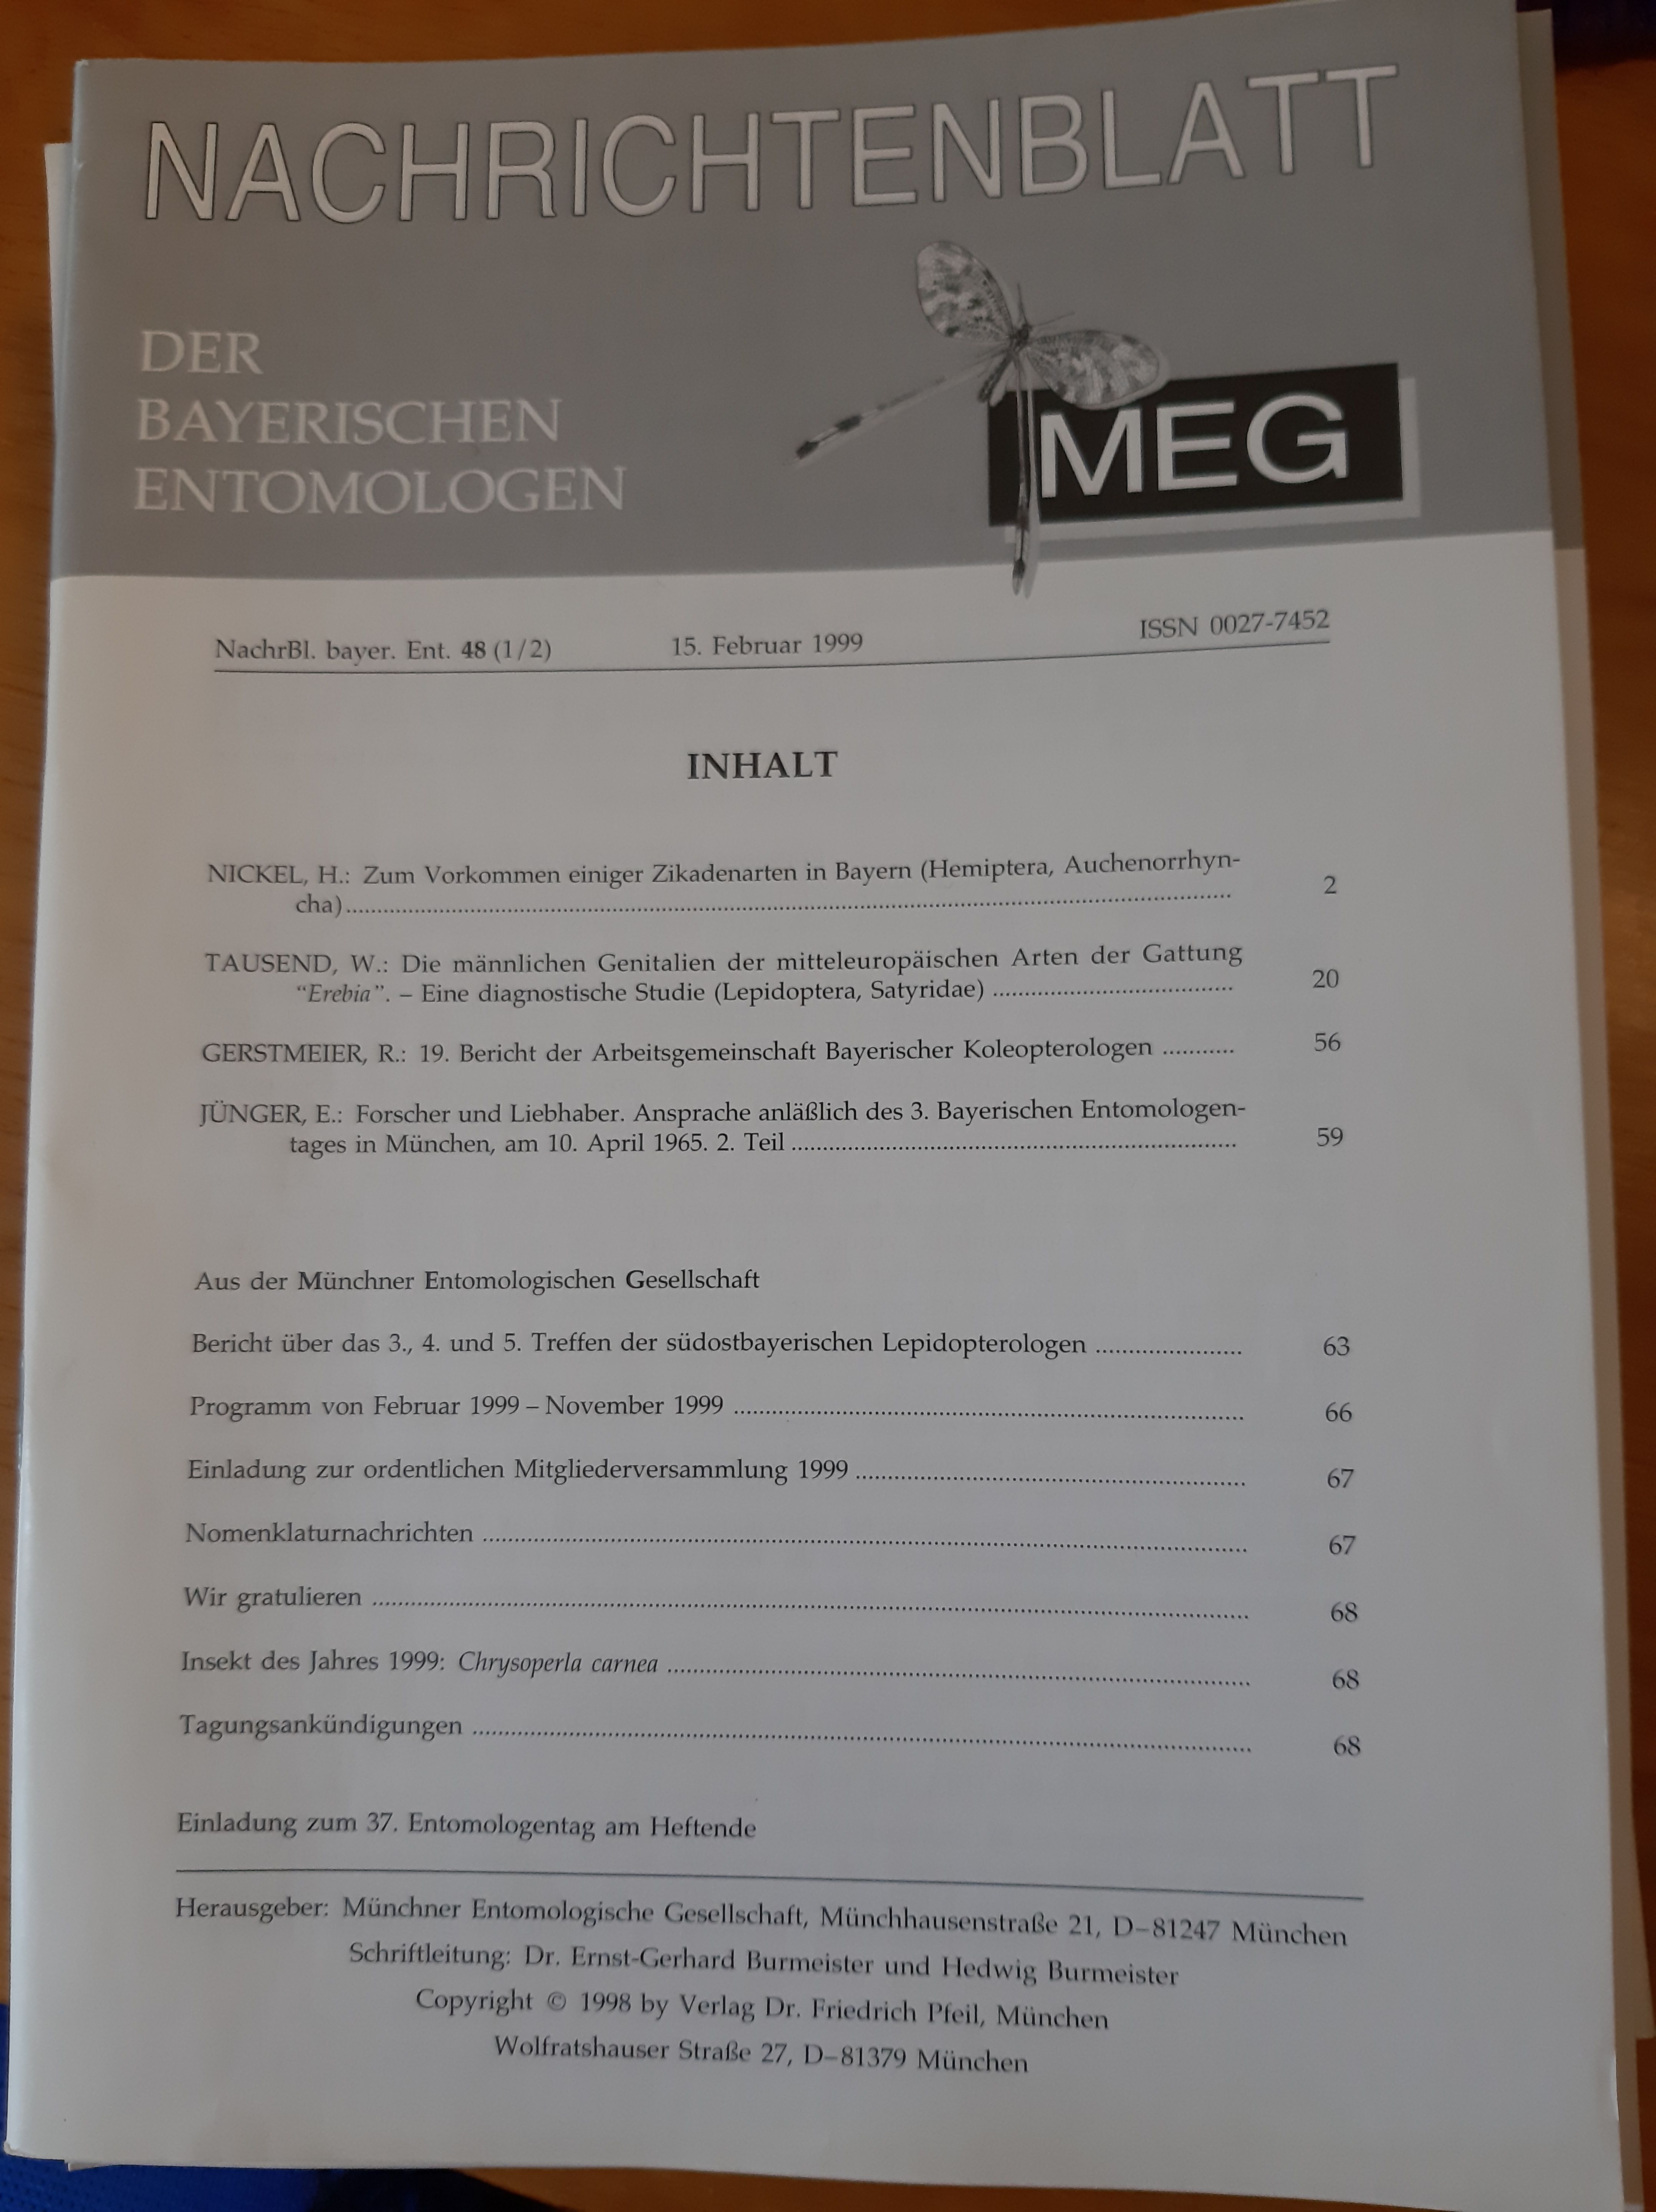 Nachrichtenblatt der Bayerischen Entomologen 1999/48. évf. 1-2. szám (Rippl-Rónai Múzeum RR-F)